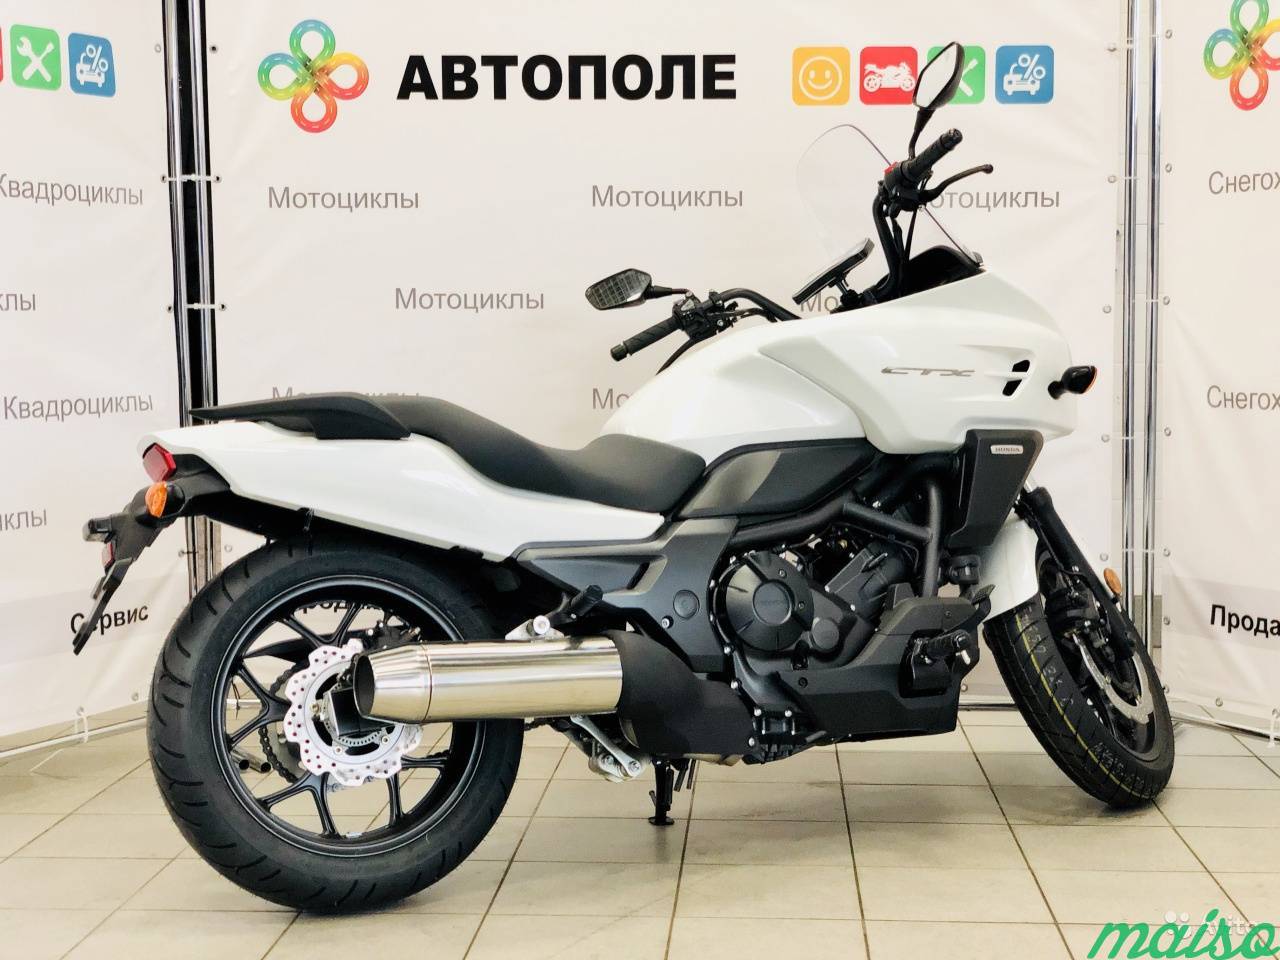 Мотоцикл Honda CTX700A 2017 в Санкт-Петербурге. Фото 2